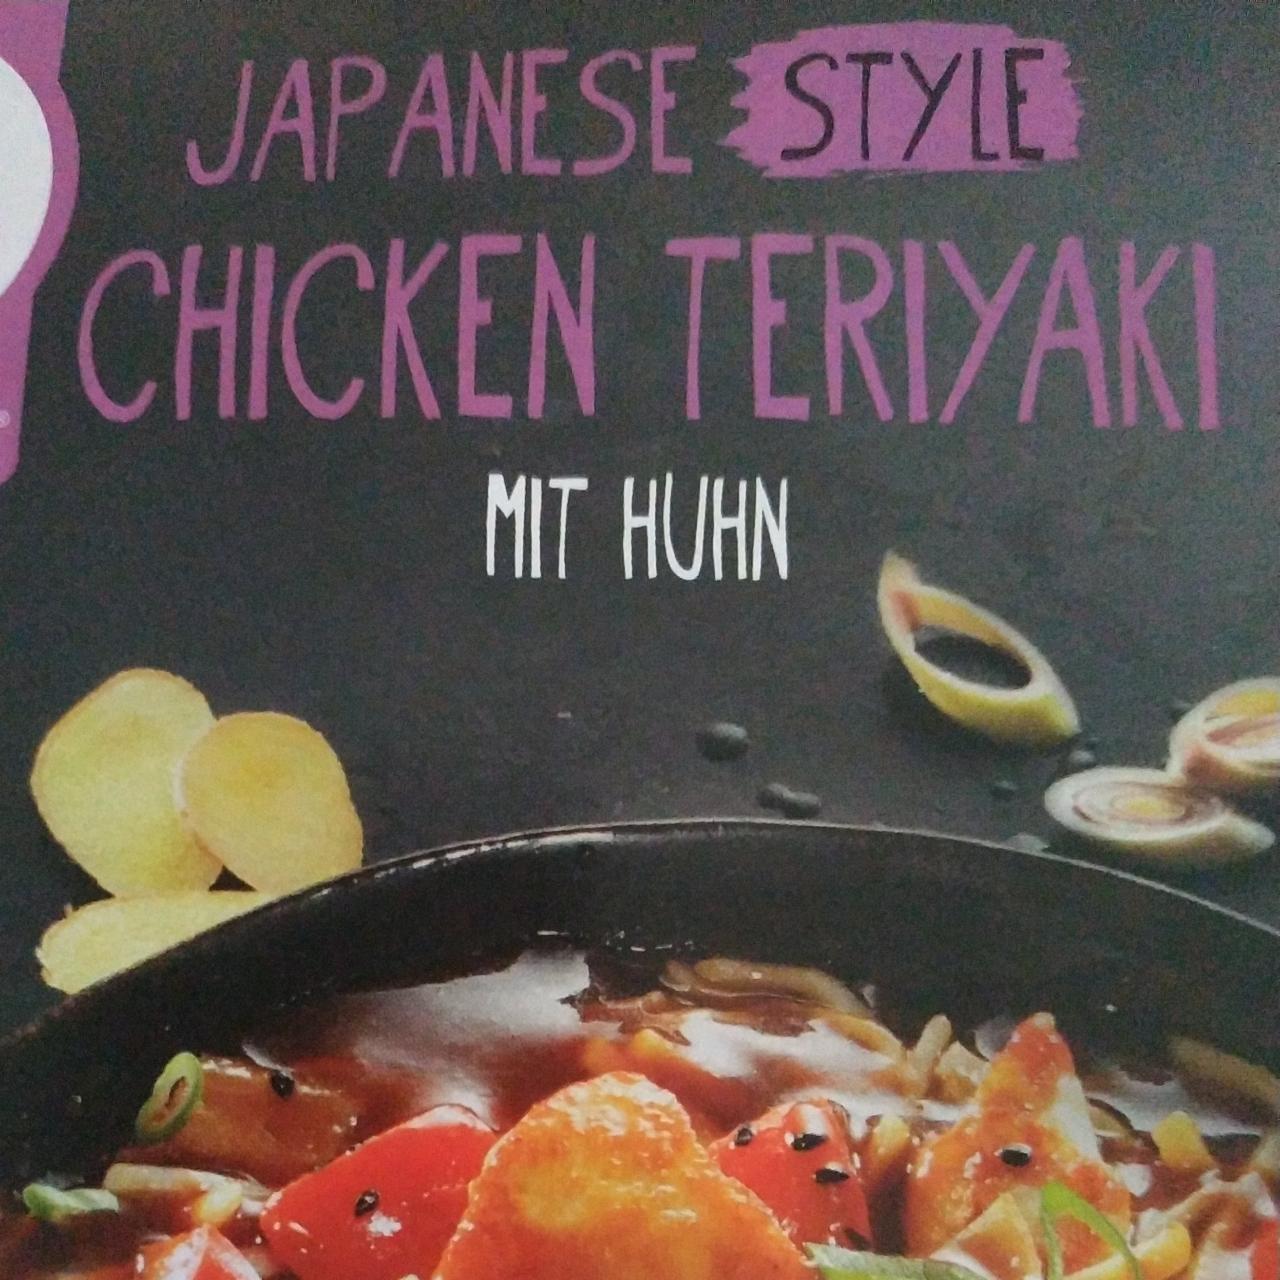 Фото - Вермишель терияки по-японски Japenese Style Chicken Teriyaki Youcook